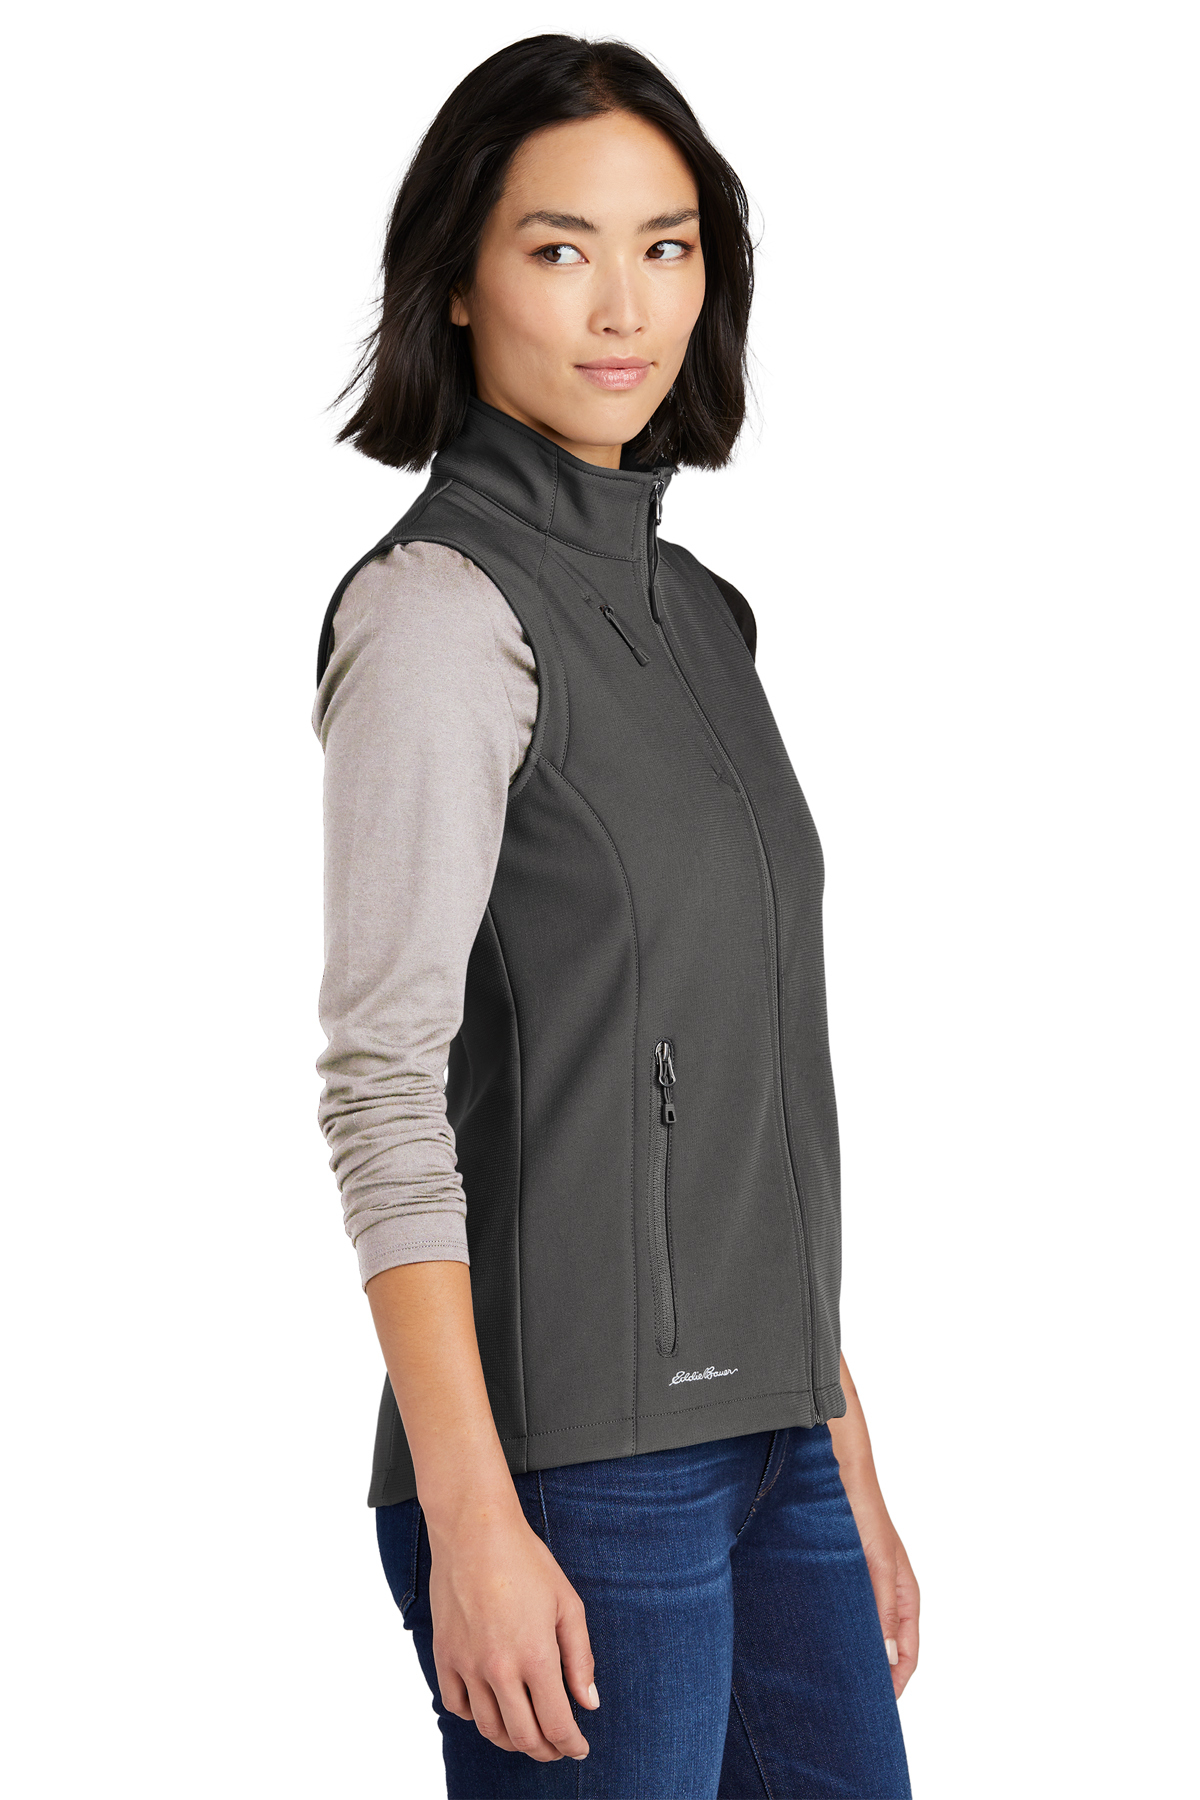 Eddie Bauer Ladies Stretch Soft Shell Vest | Product | SanMar